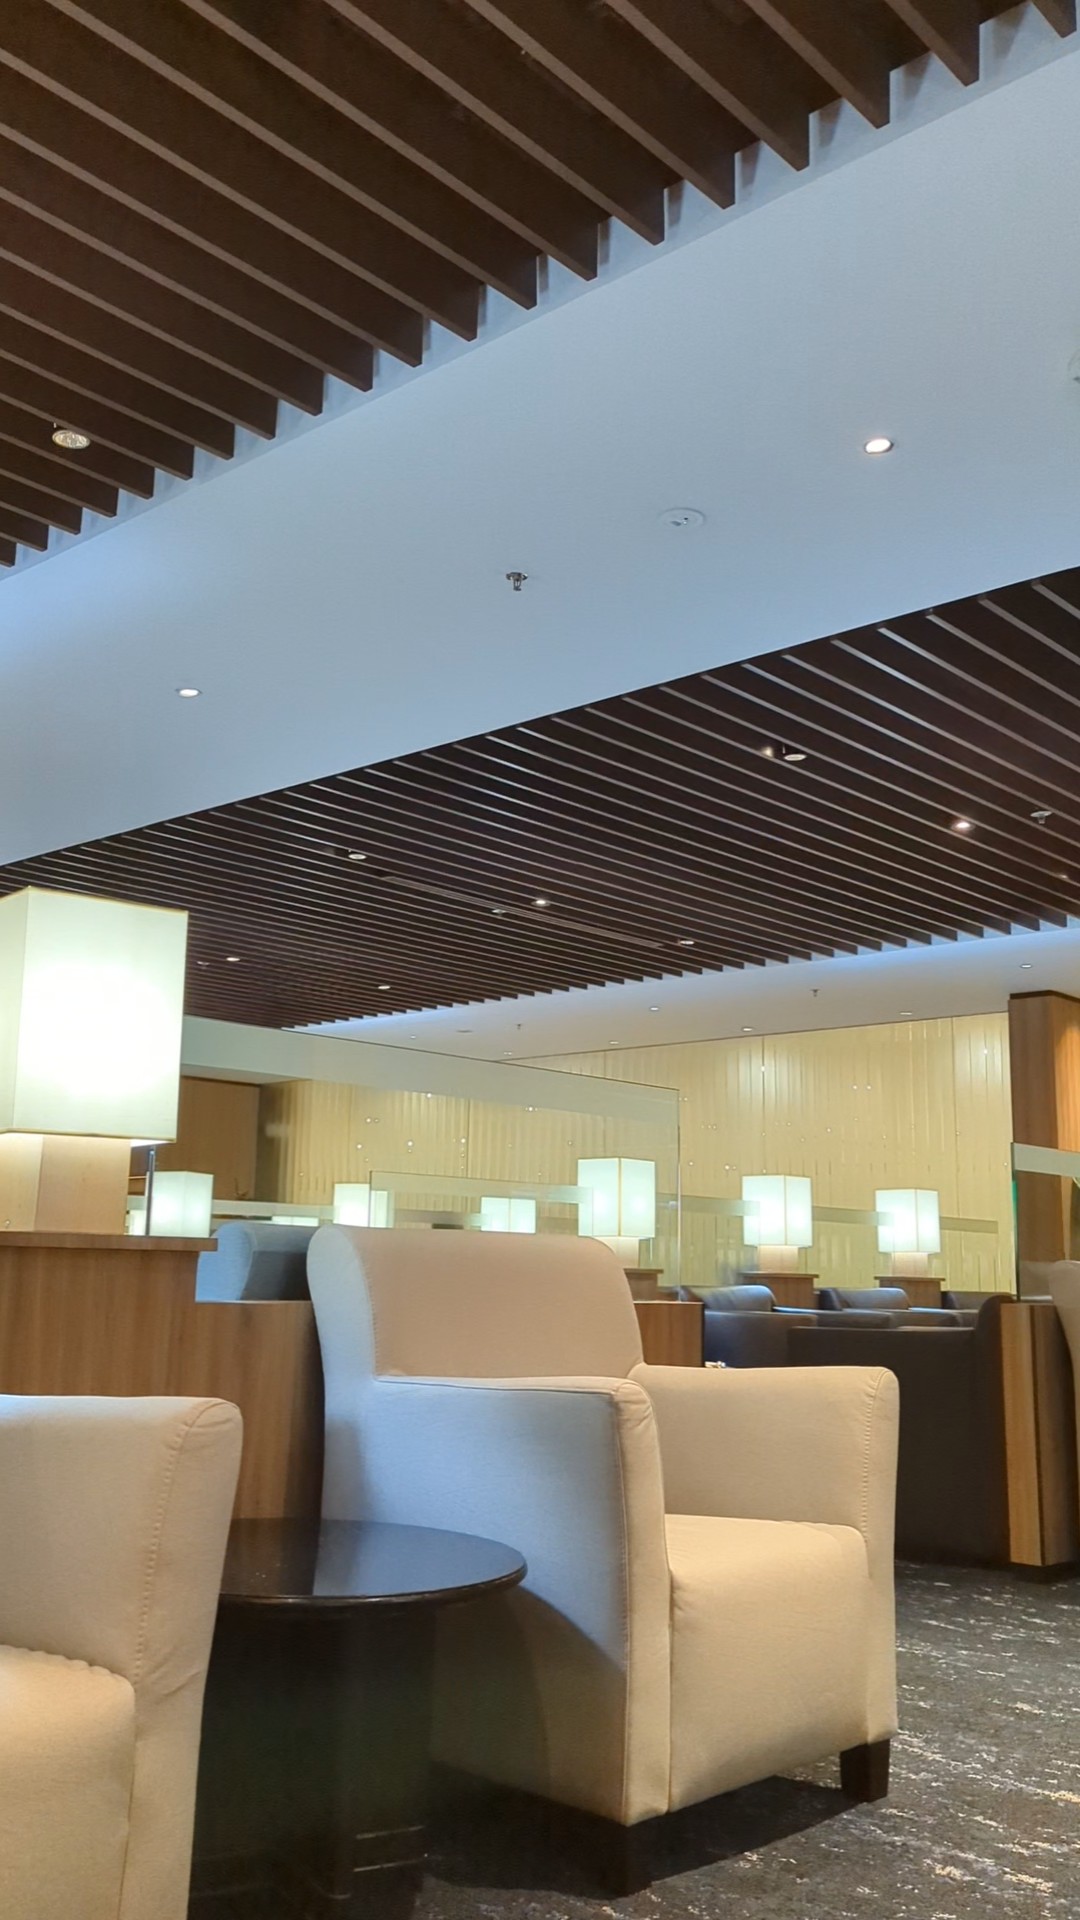 Singapore Airlines Krisflyer Gold Lounge, Changi Airport Terminal 2